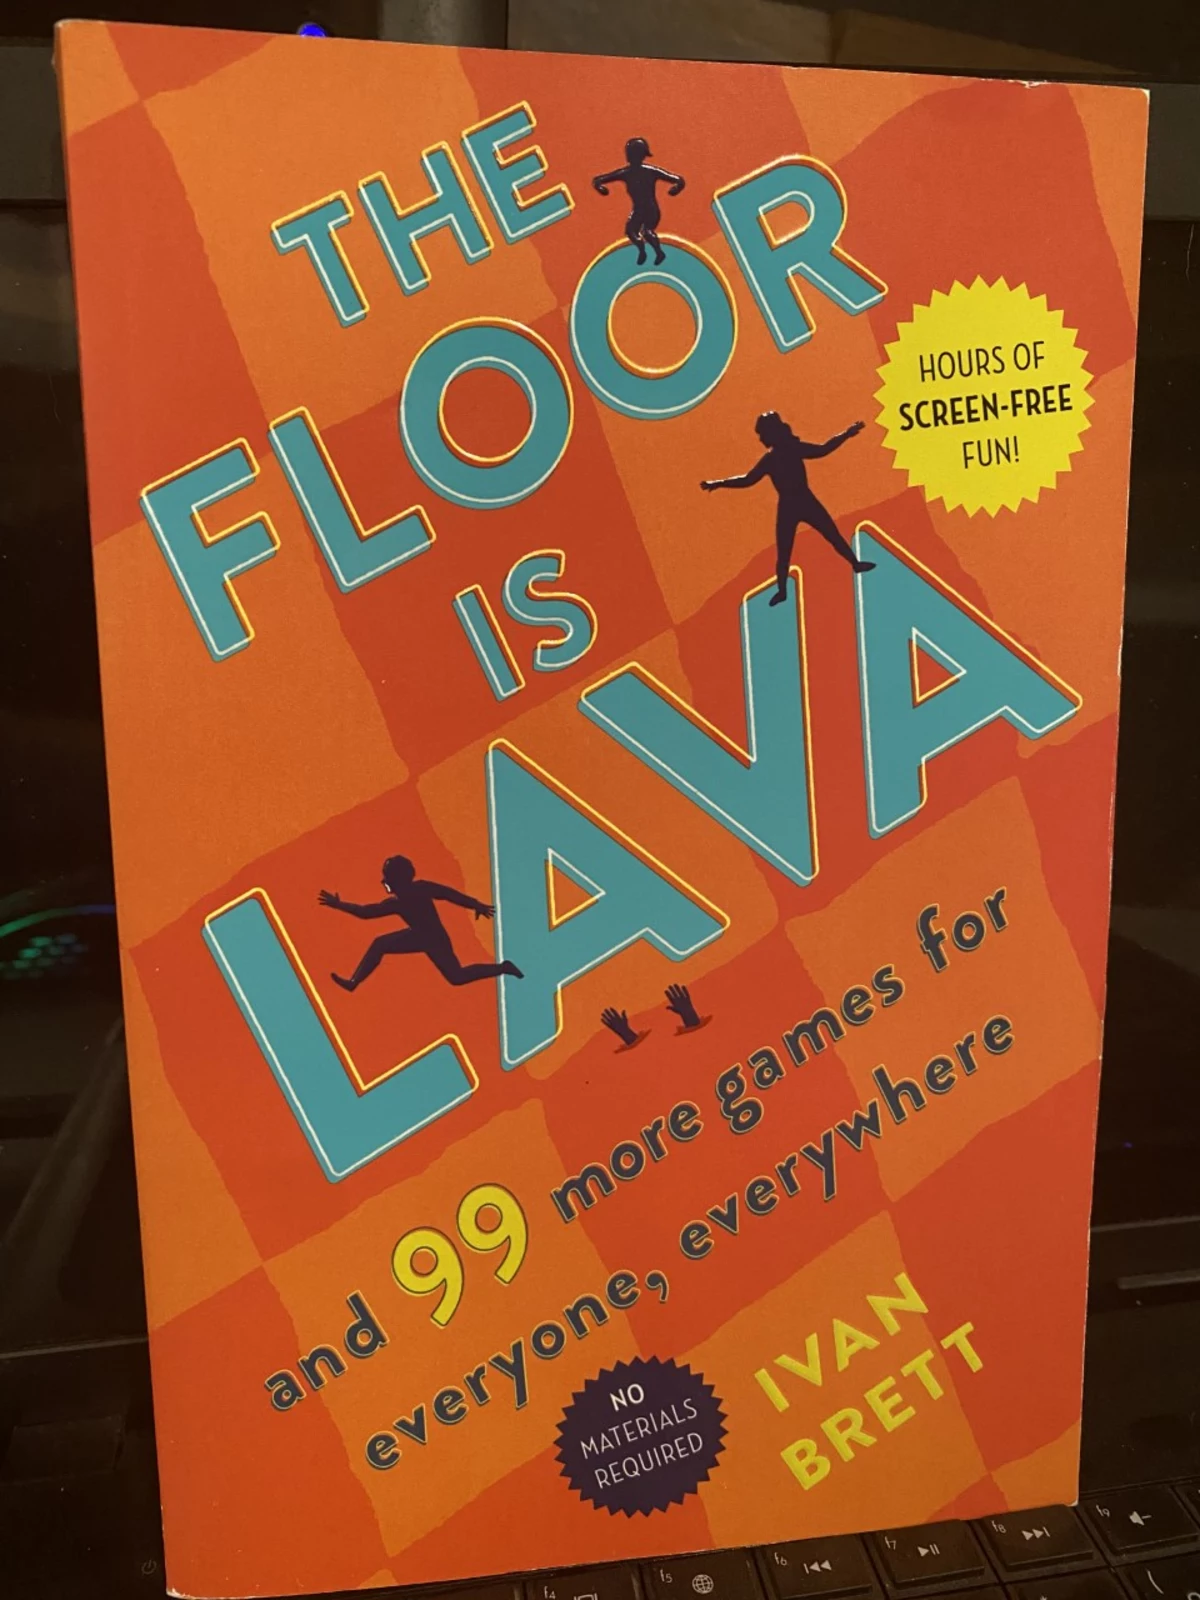 Ivan Brett Collection 2 Books Set Bored? Games!, Floor is Lava Paperback